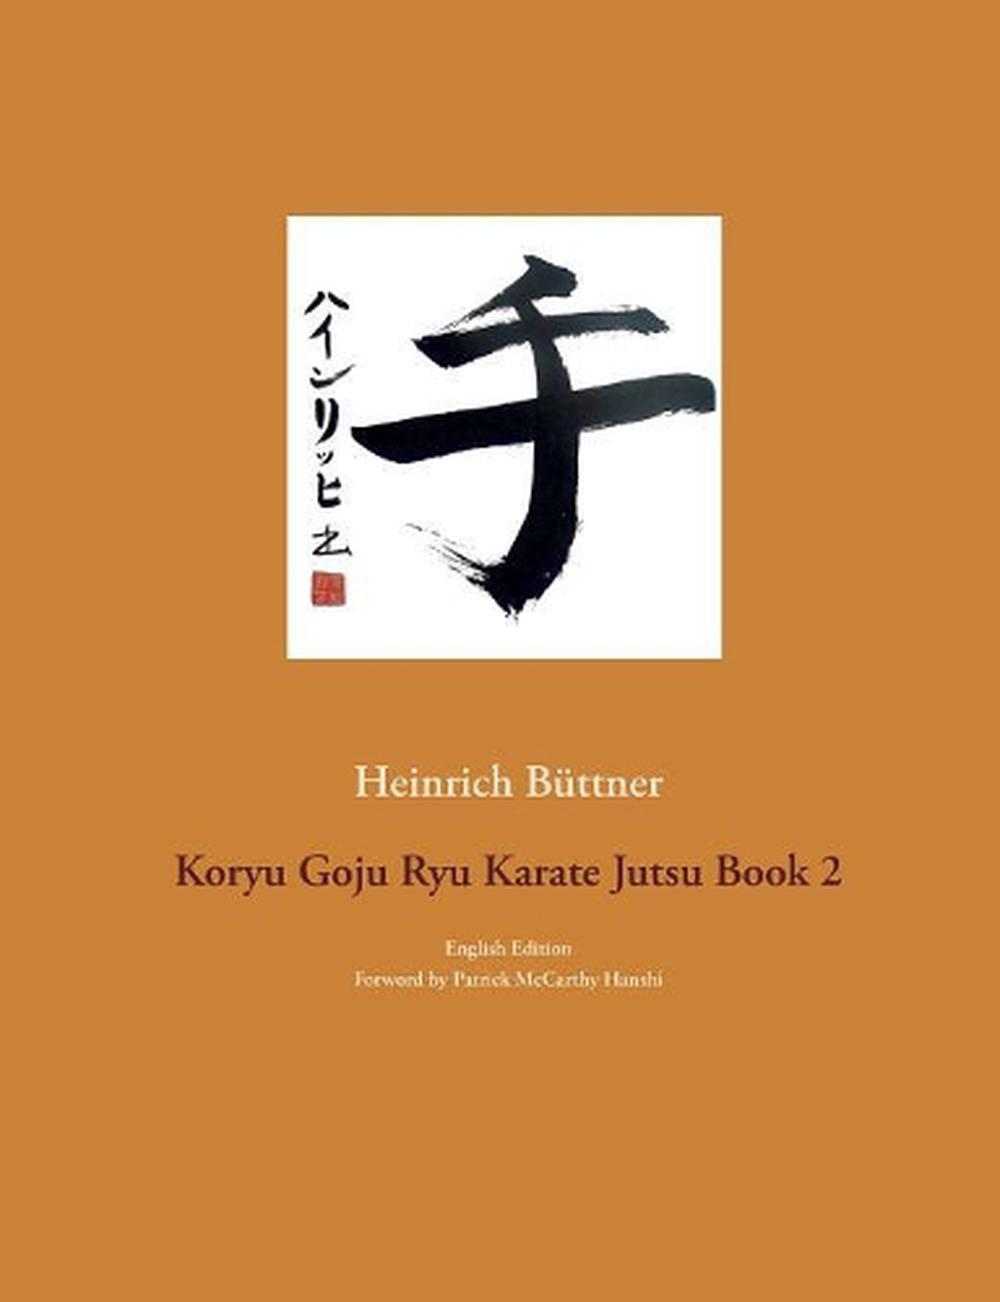 Koryu Goju Ryu Karate Jutsu Book 2: English Edition by Heinrich Buttner